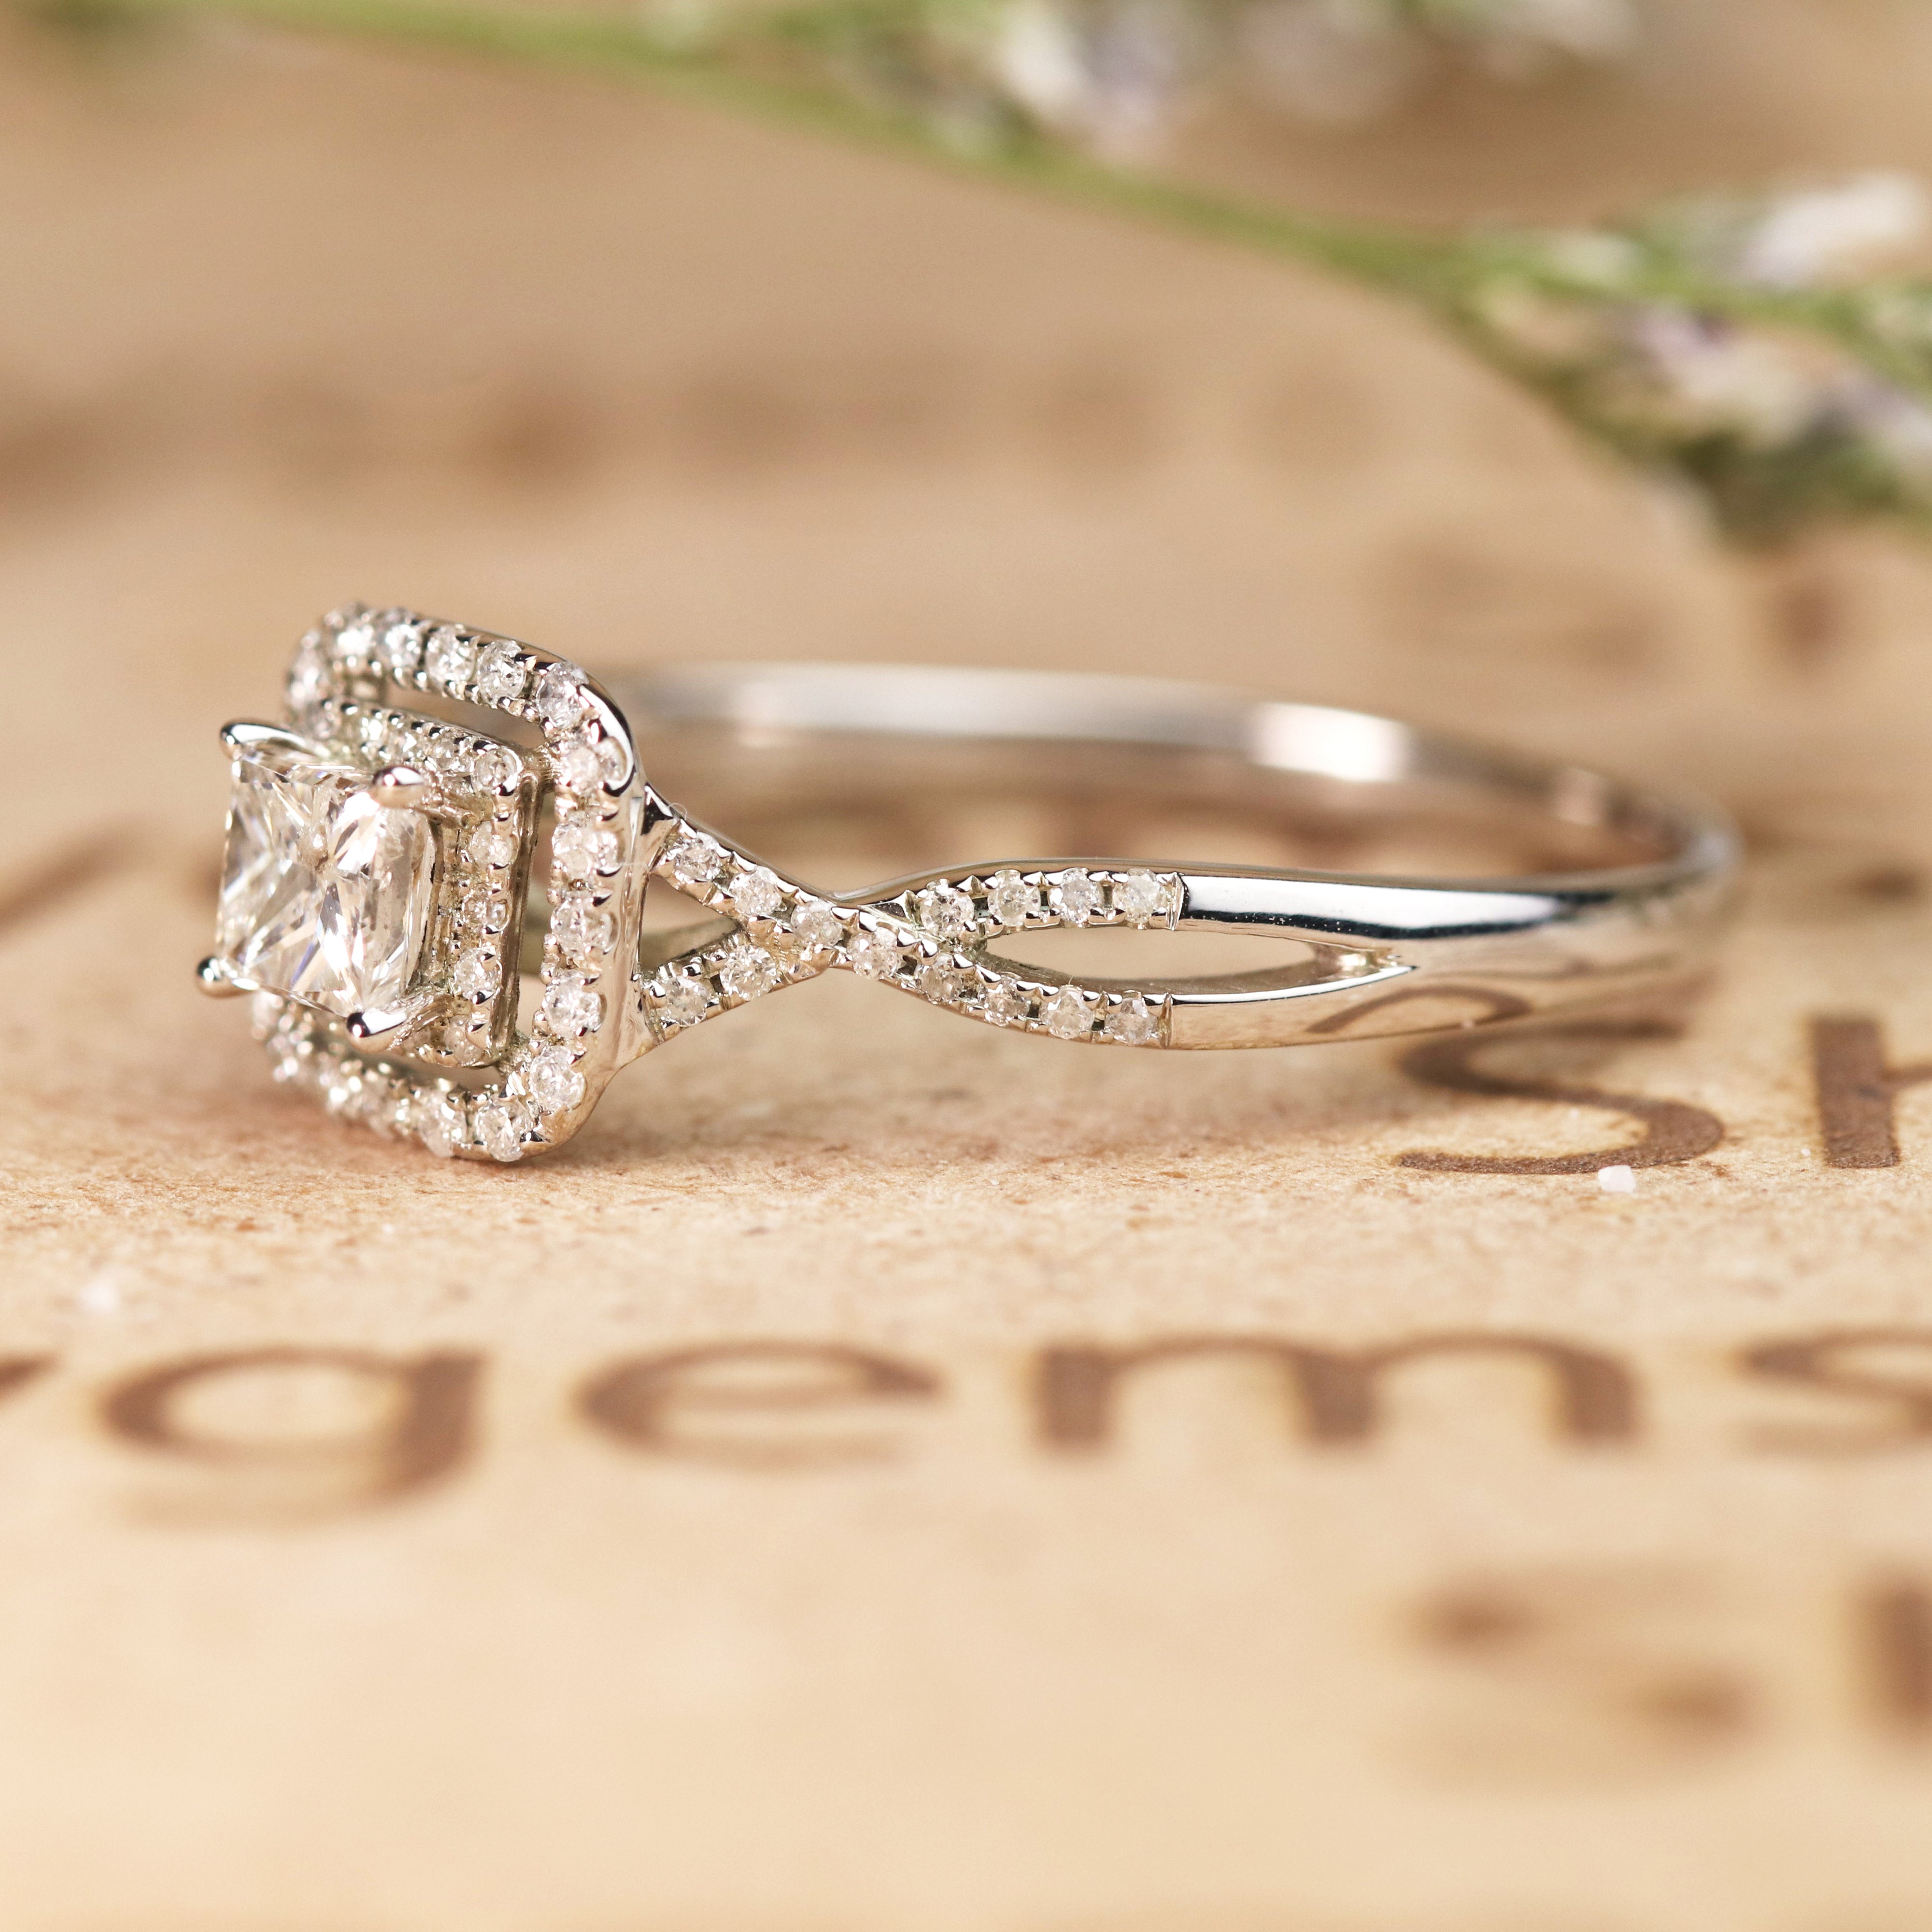 One Carat Princess Cut Diamond Ring | Barkev's